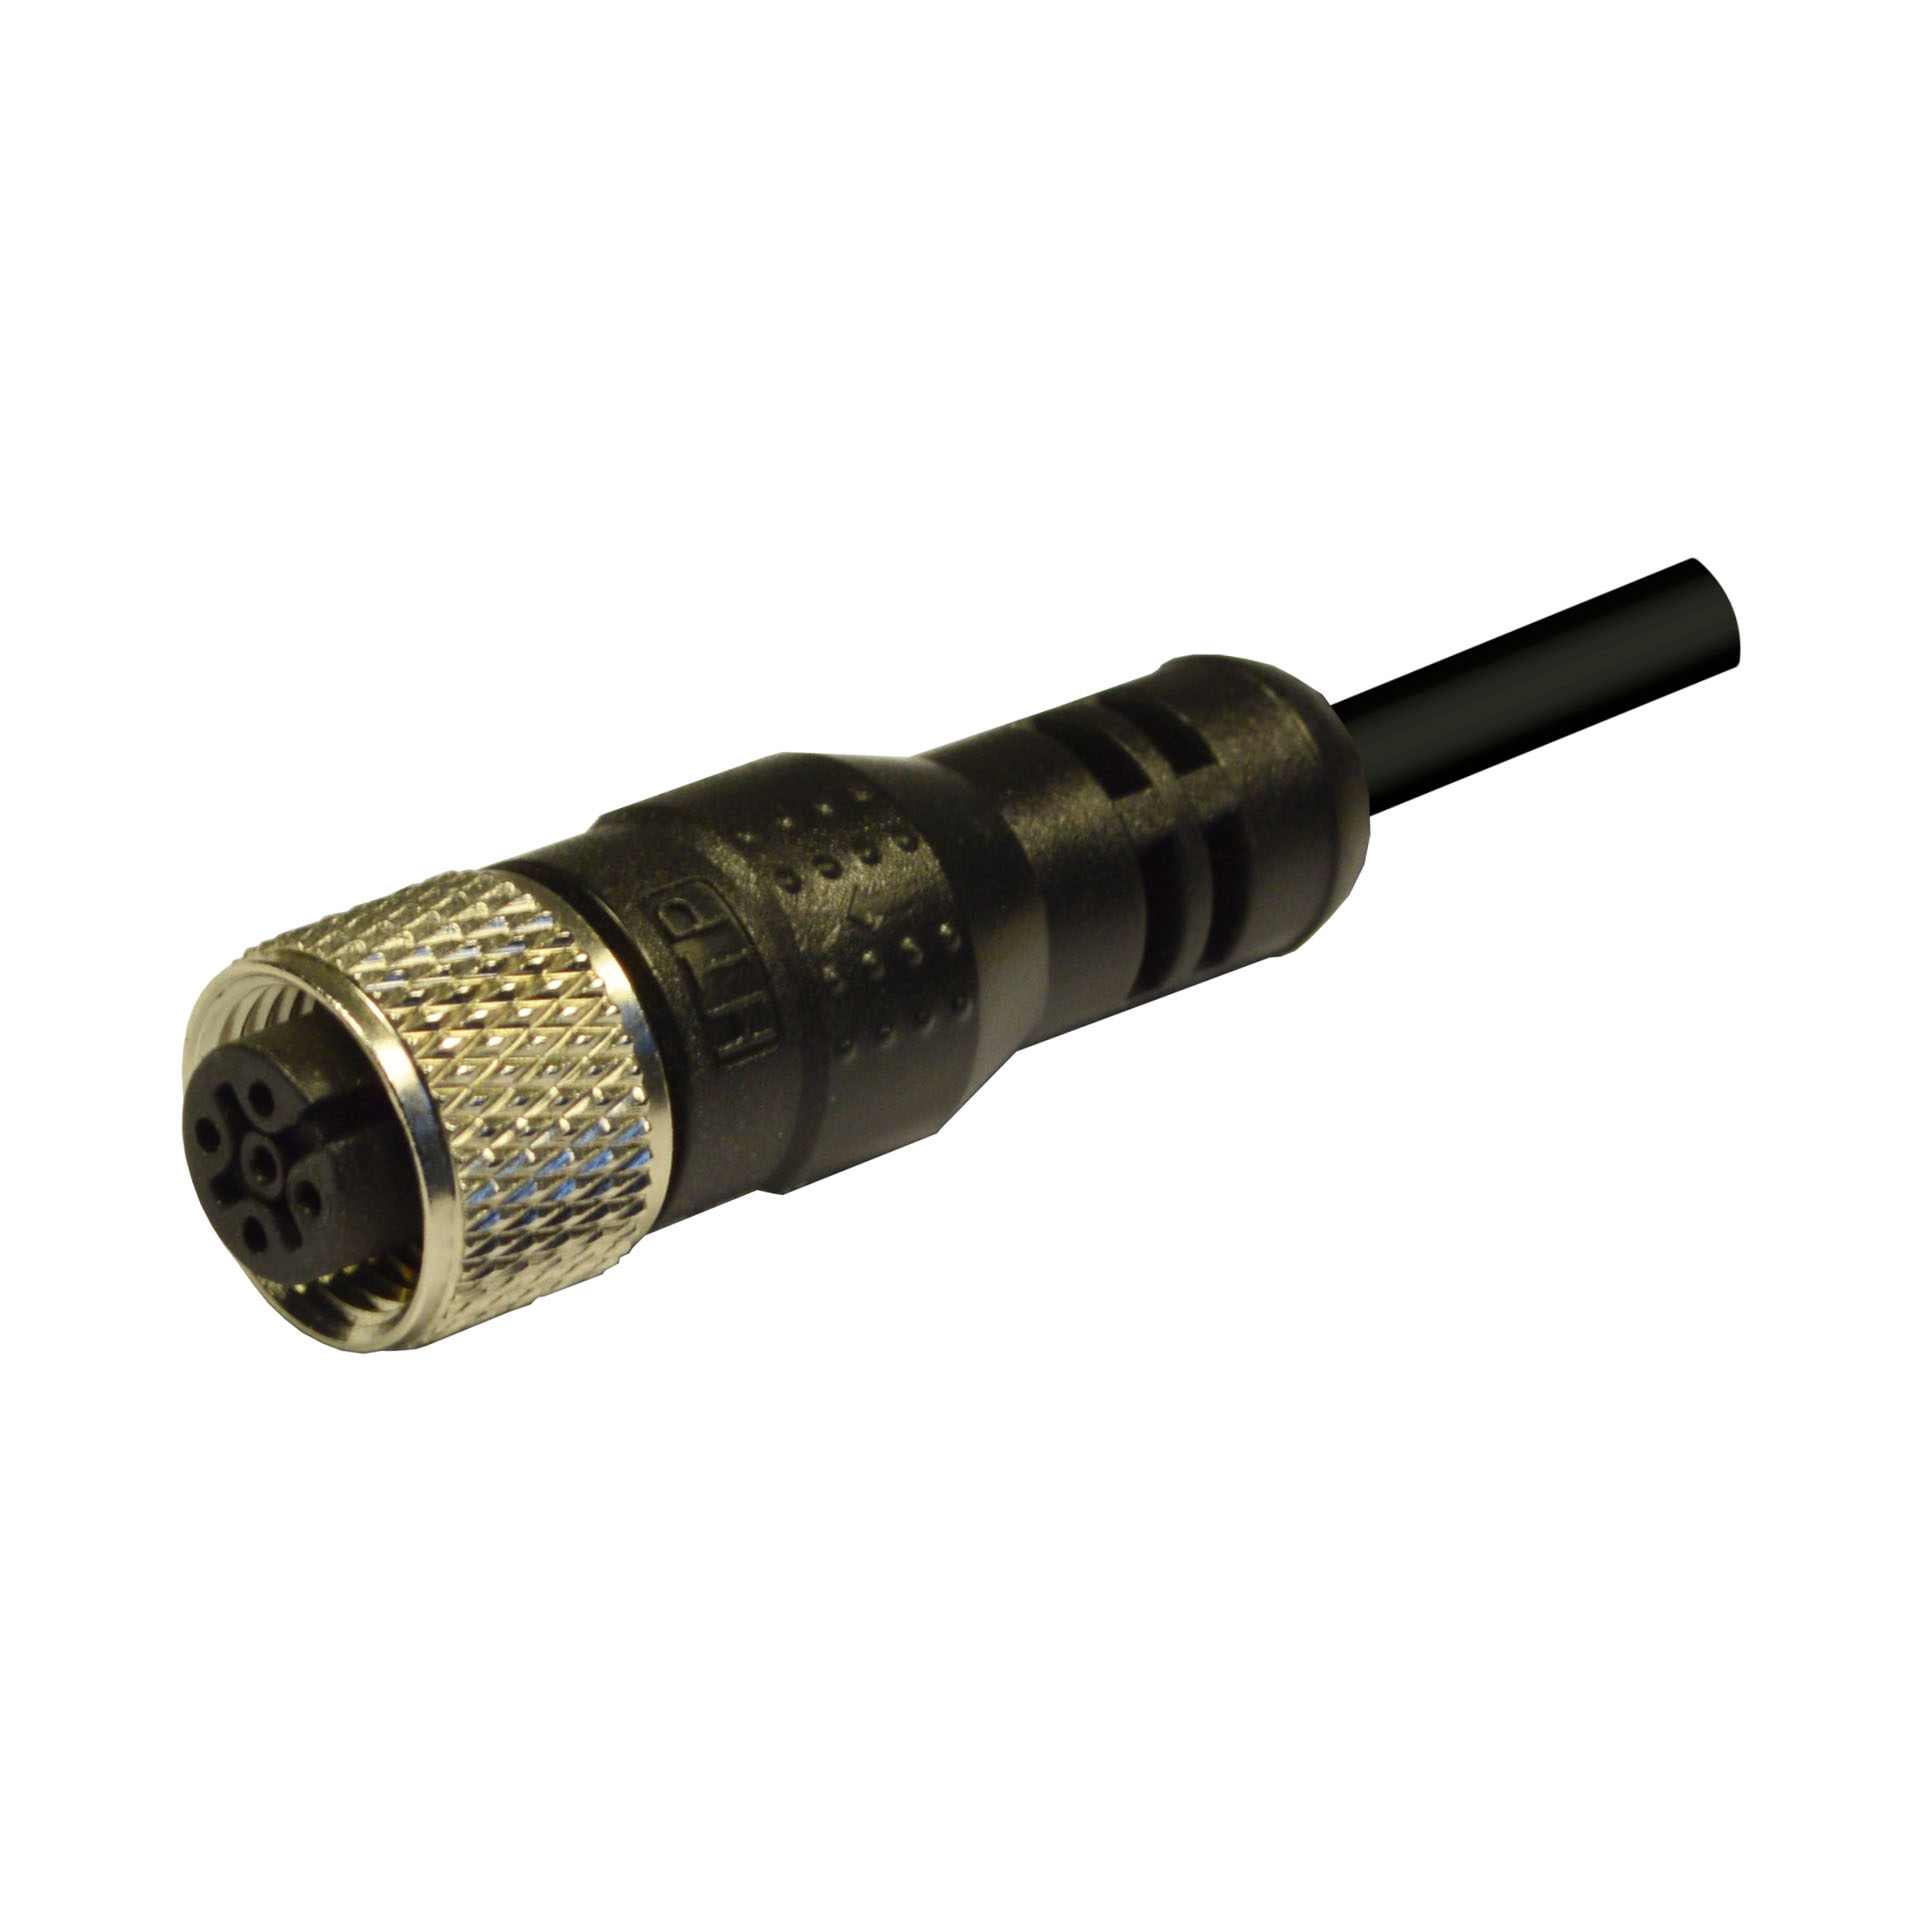 M12 fem conn - 180° - 5pol - 5 m . Cable type PVC/PVC UL/CSA 5x0,25 col.grey